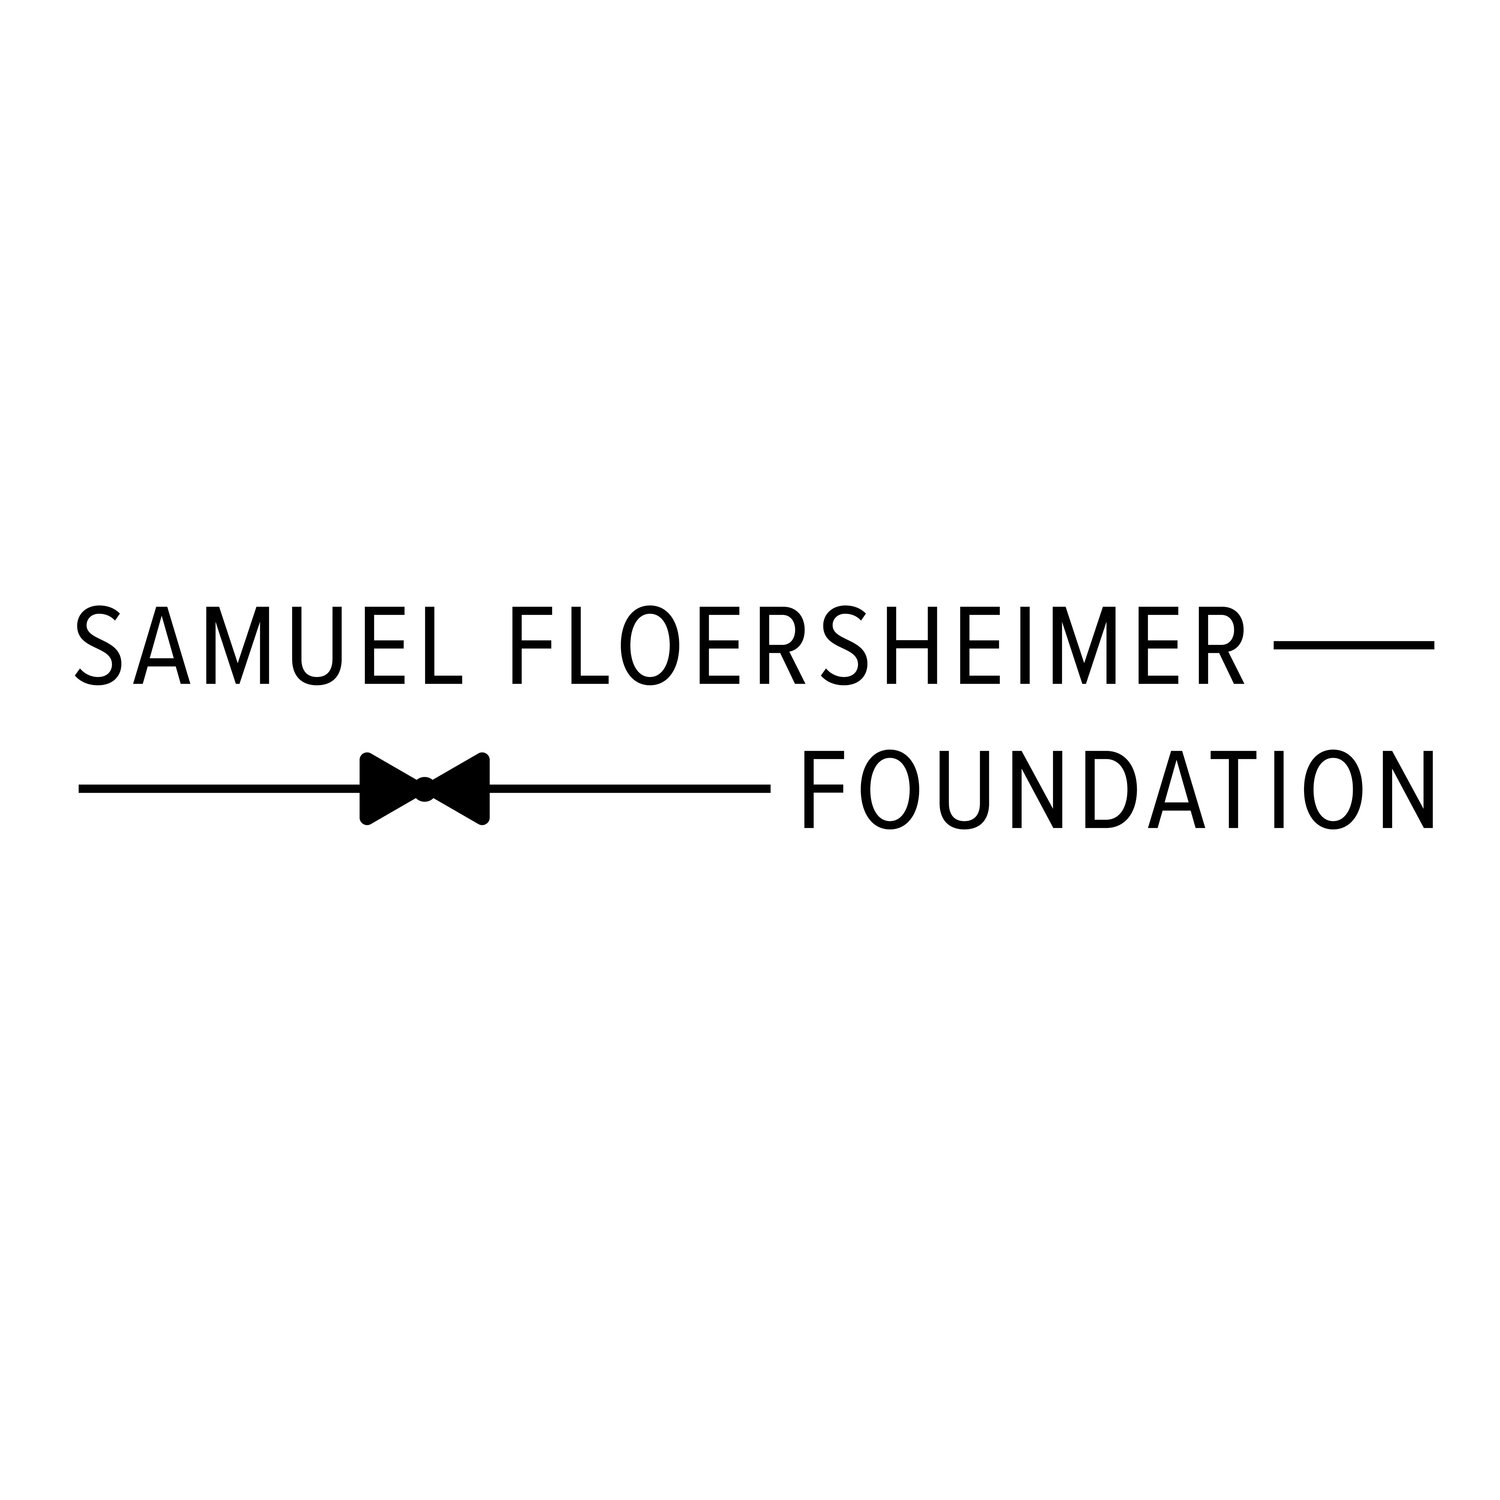 The Samuel Floersheimer Foundation